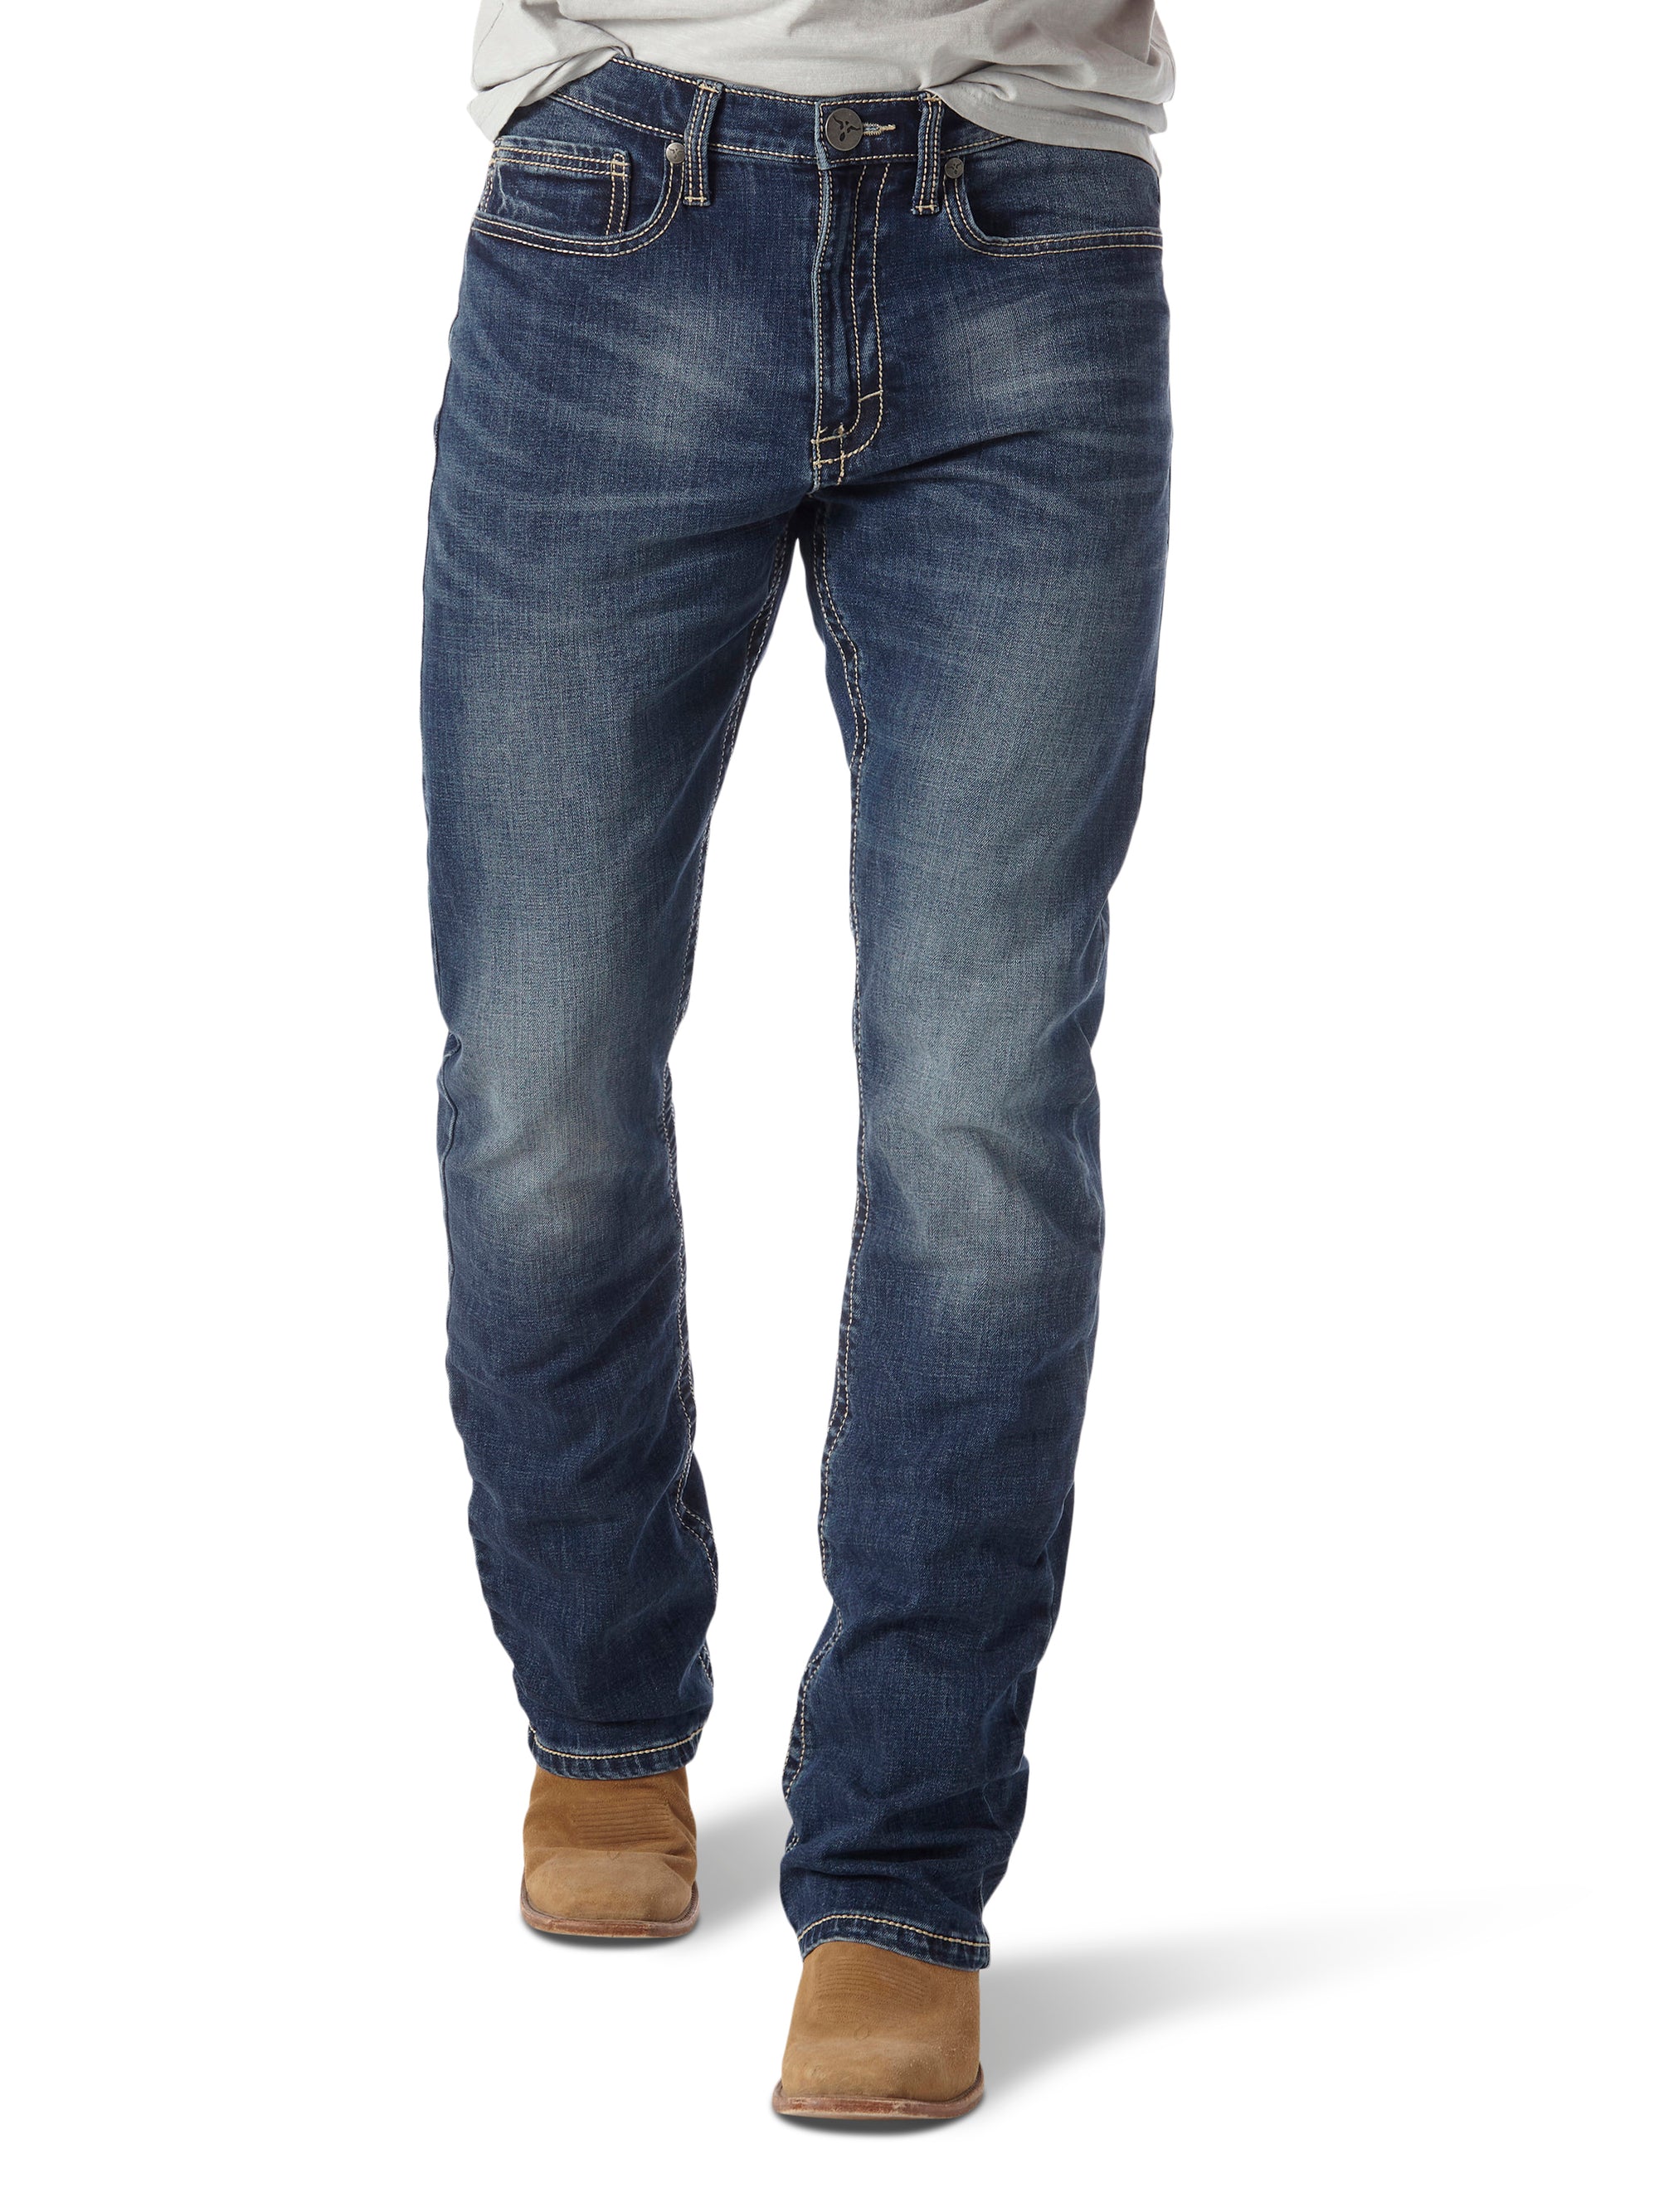 Wrangler Men's 20X Midland Vintage Bootcut Jeans